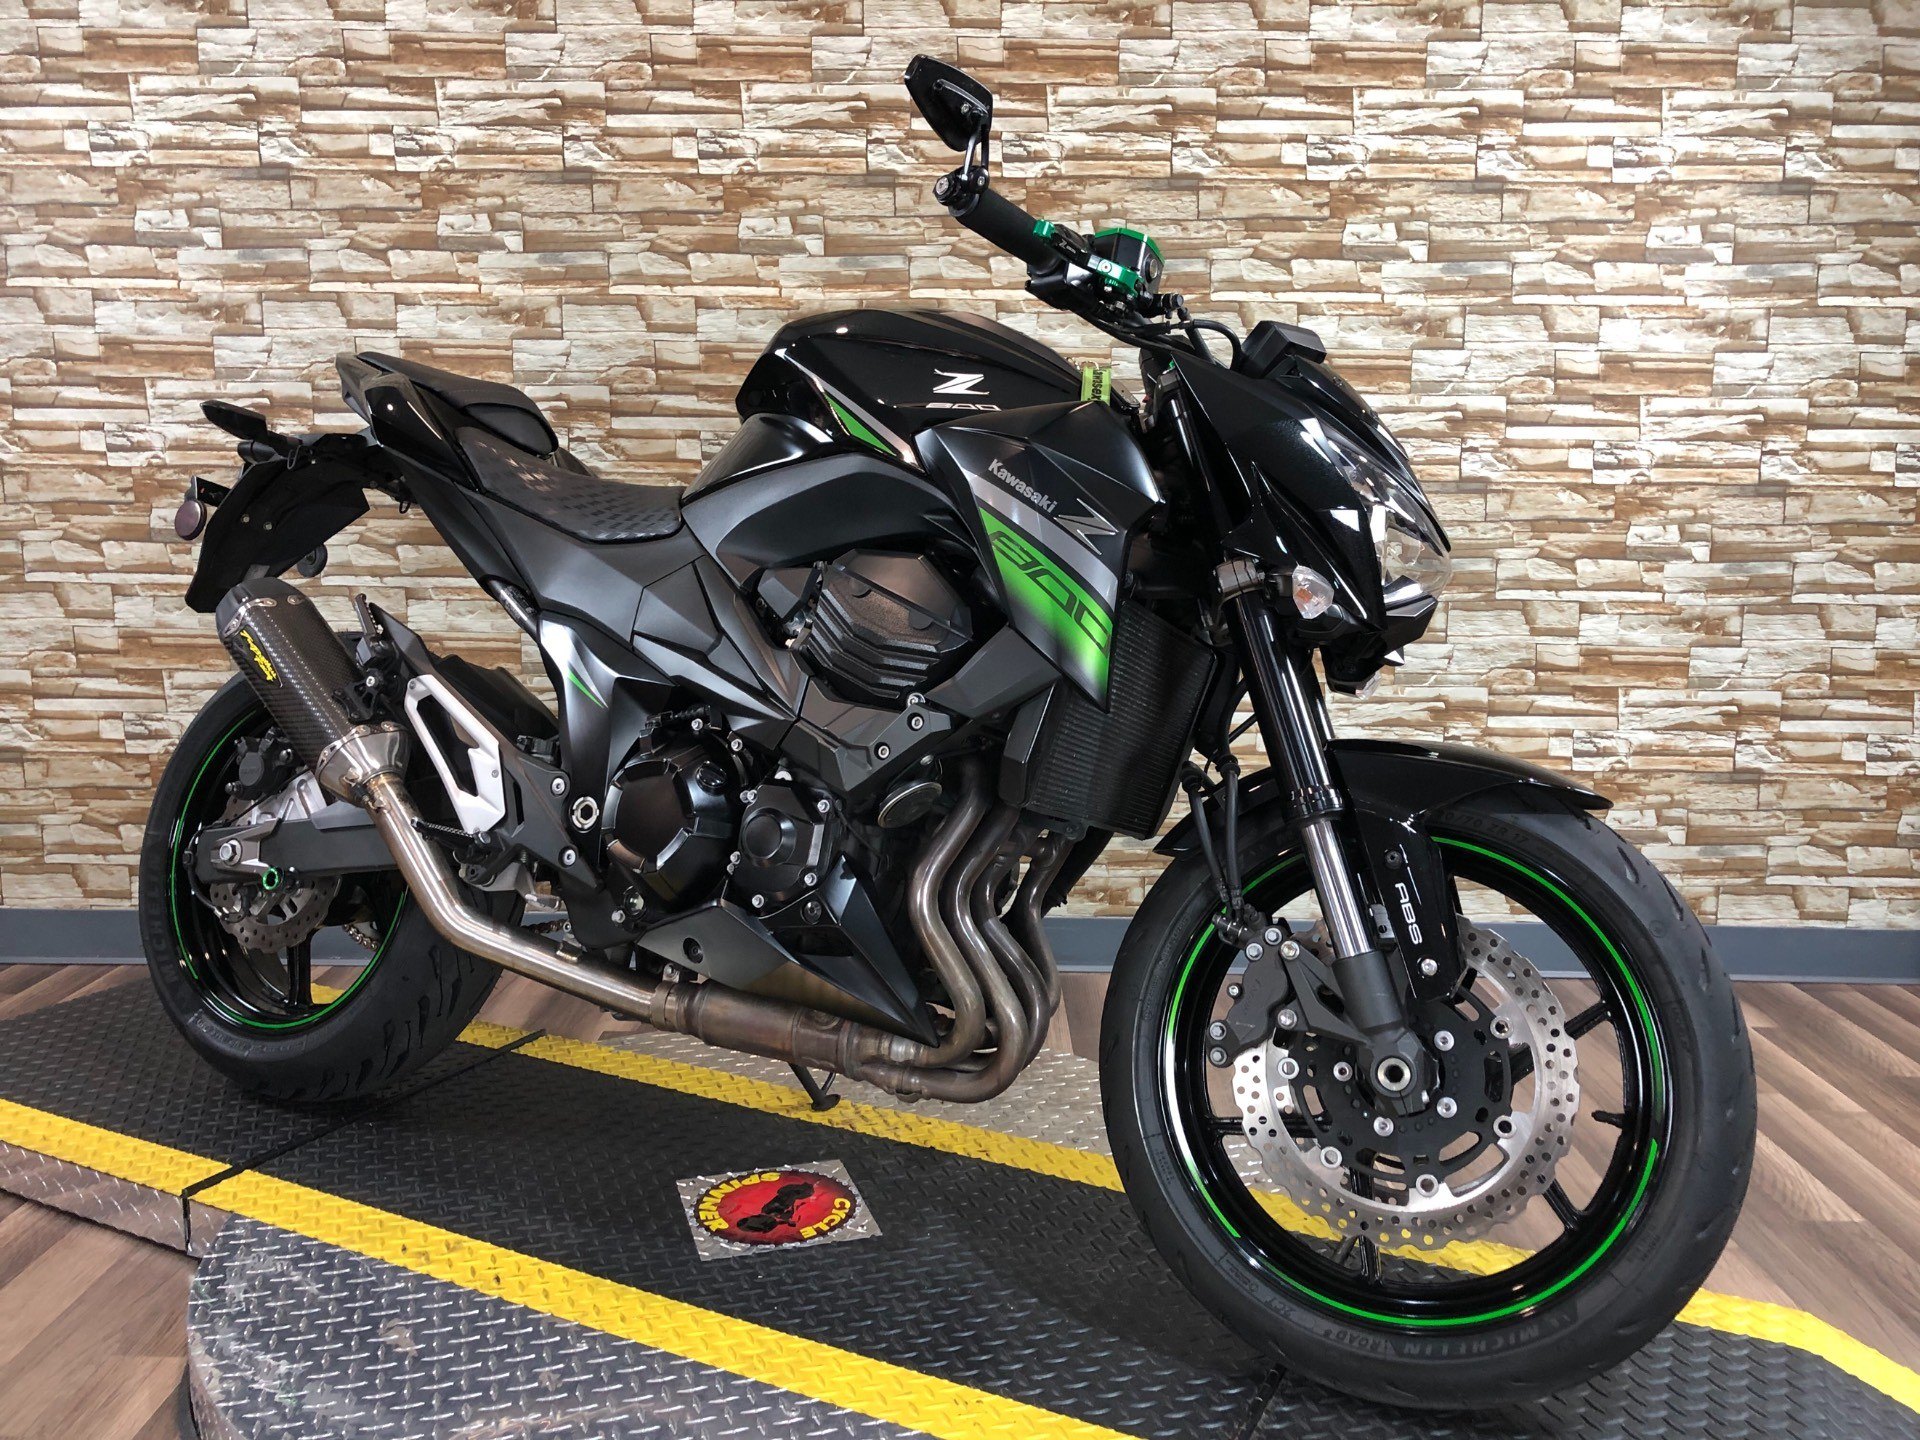 Used 2016 Kawasaki Z800 ABS Motorcycles in Port Charlotte, FL | Stock ...